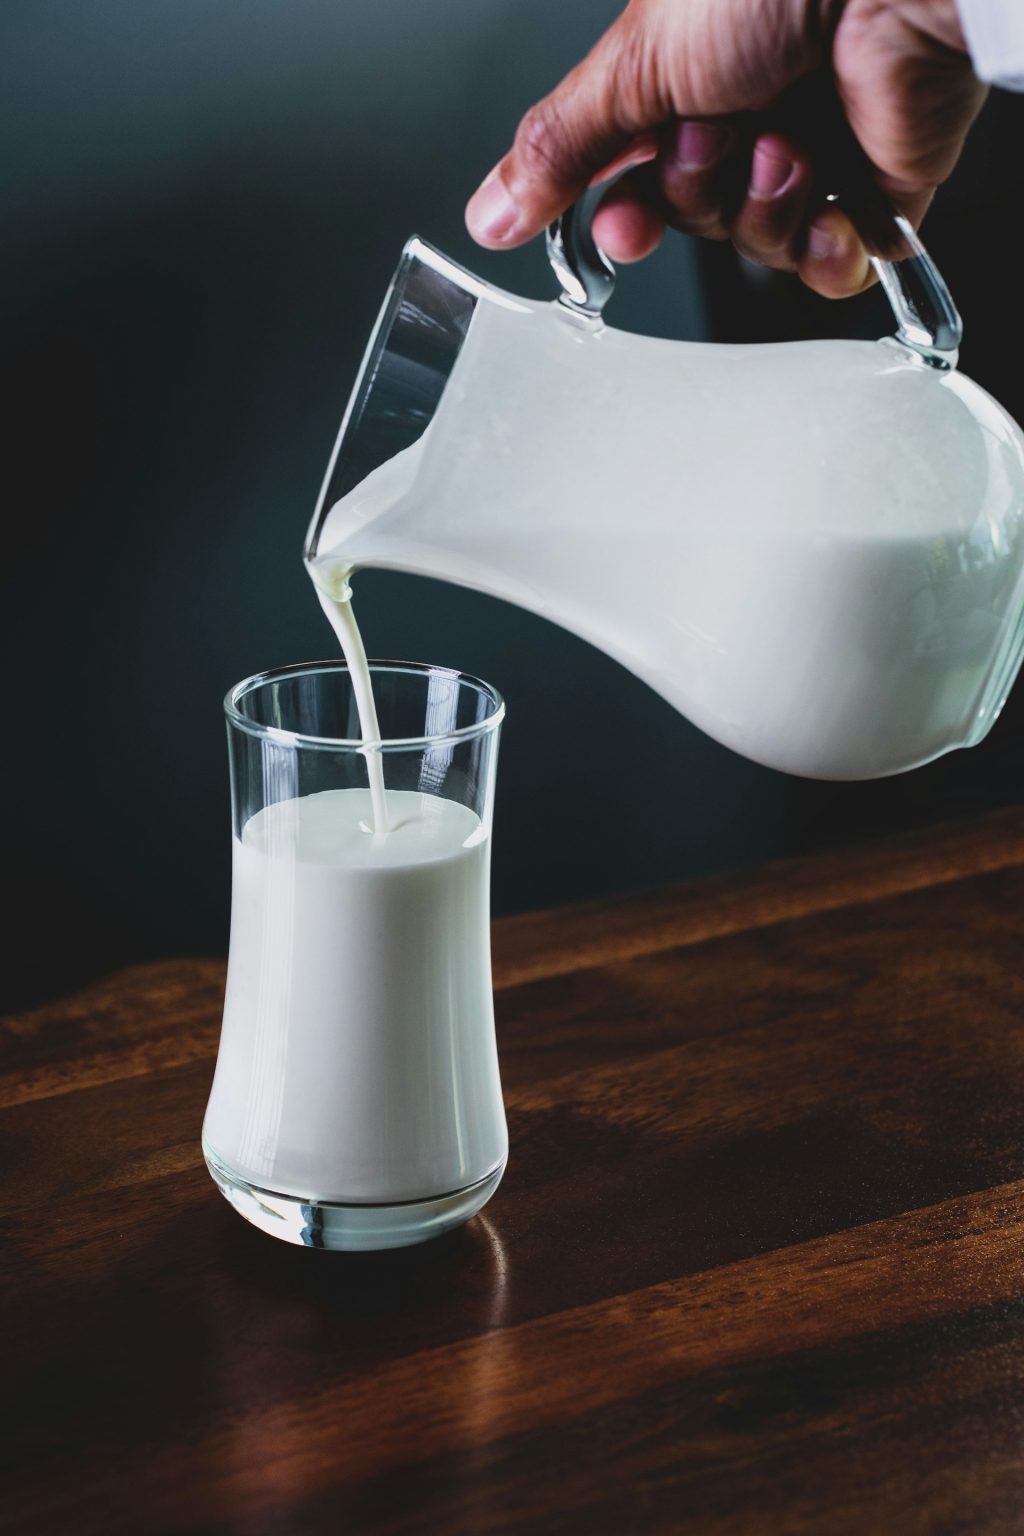 Are alternative milks actually good for you?